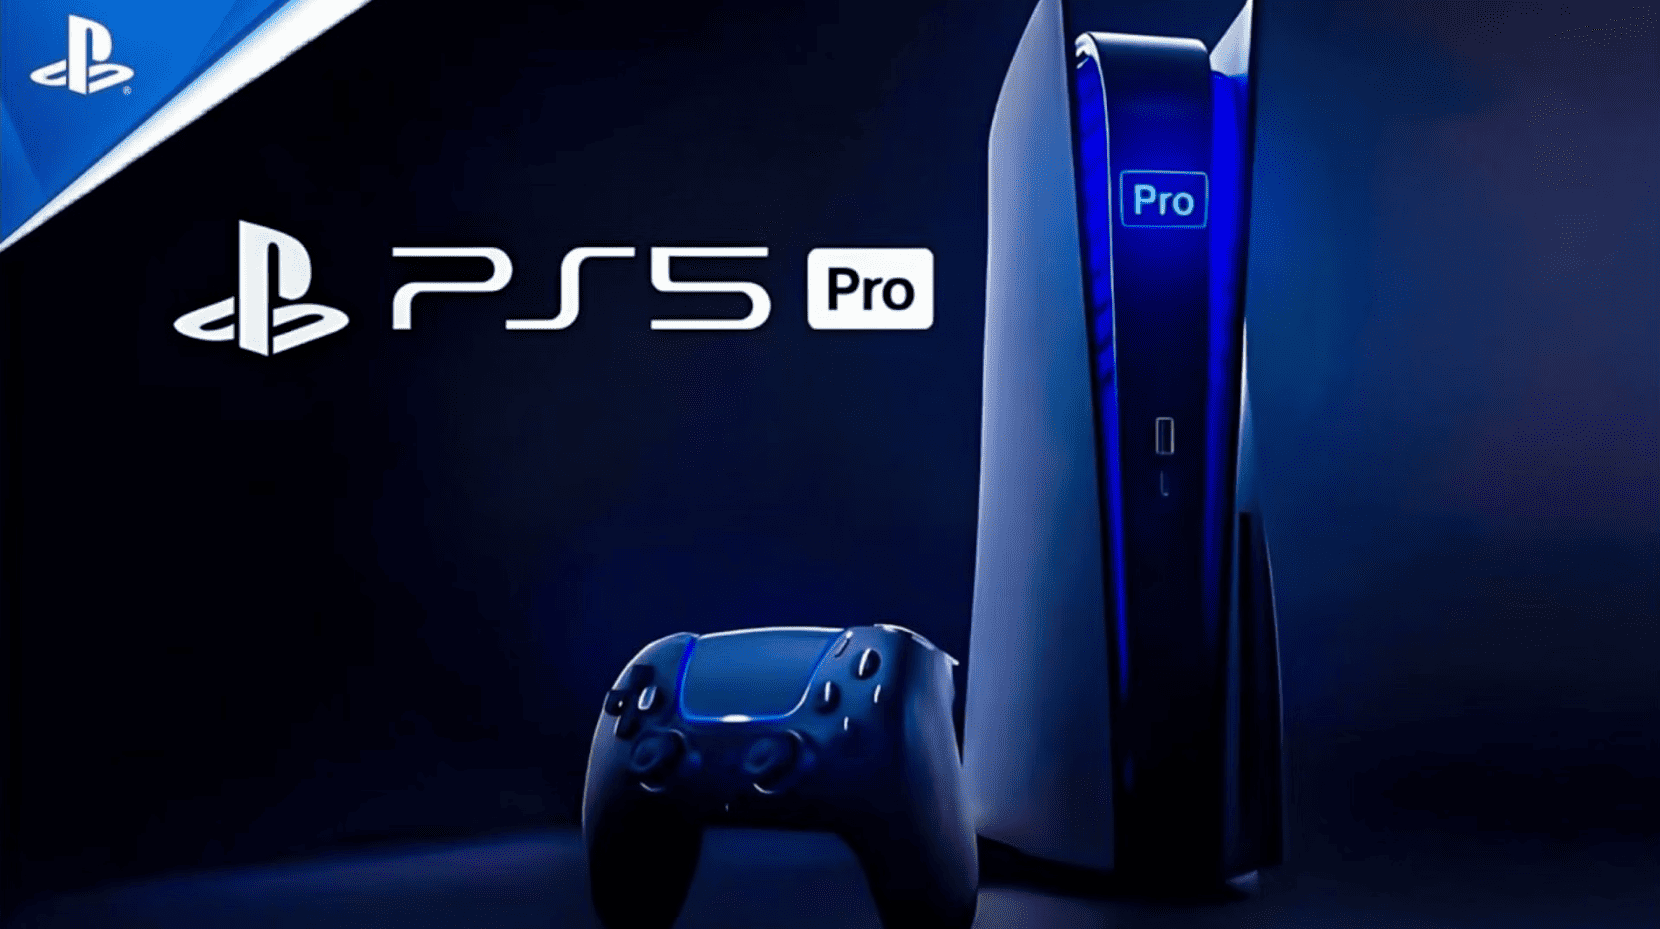 PS5 Pro? Vazamento indica hardware poderoso que pode ser de novo console